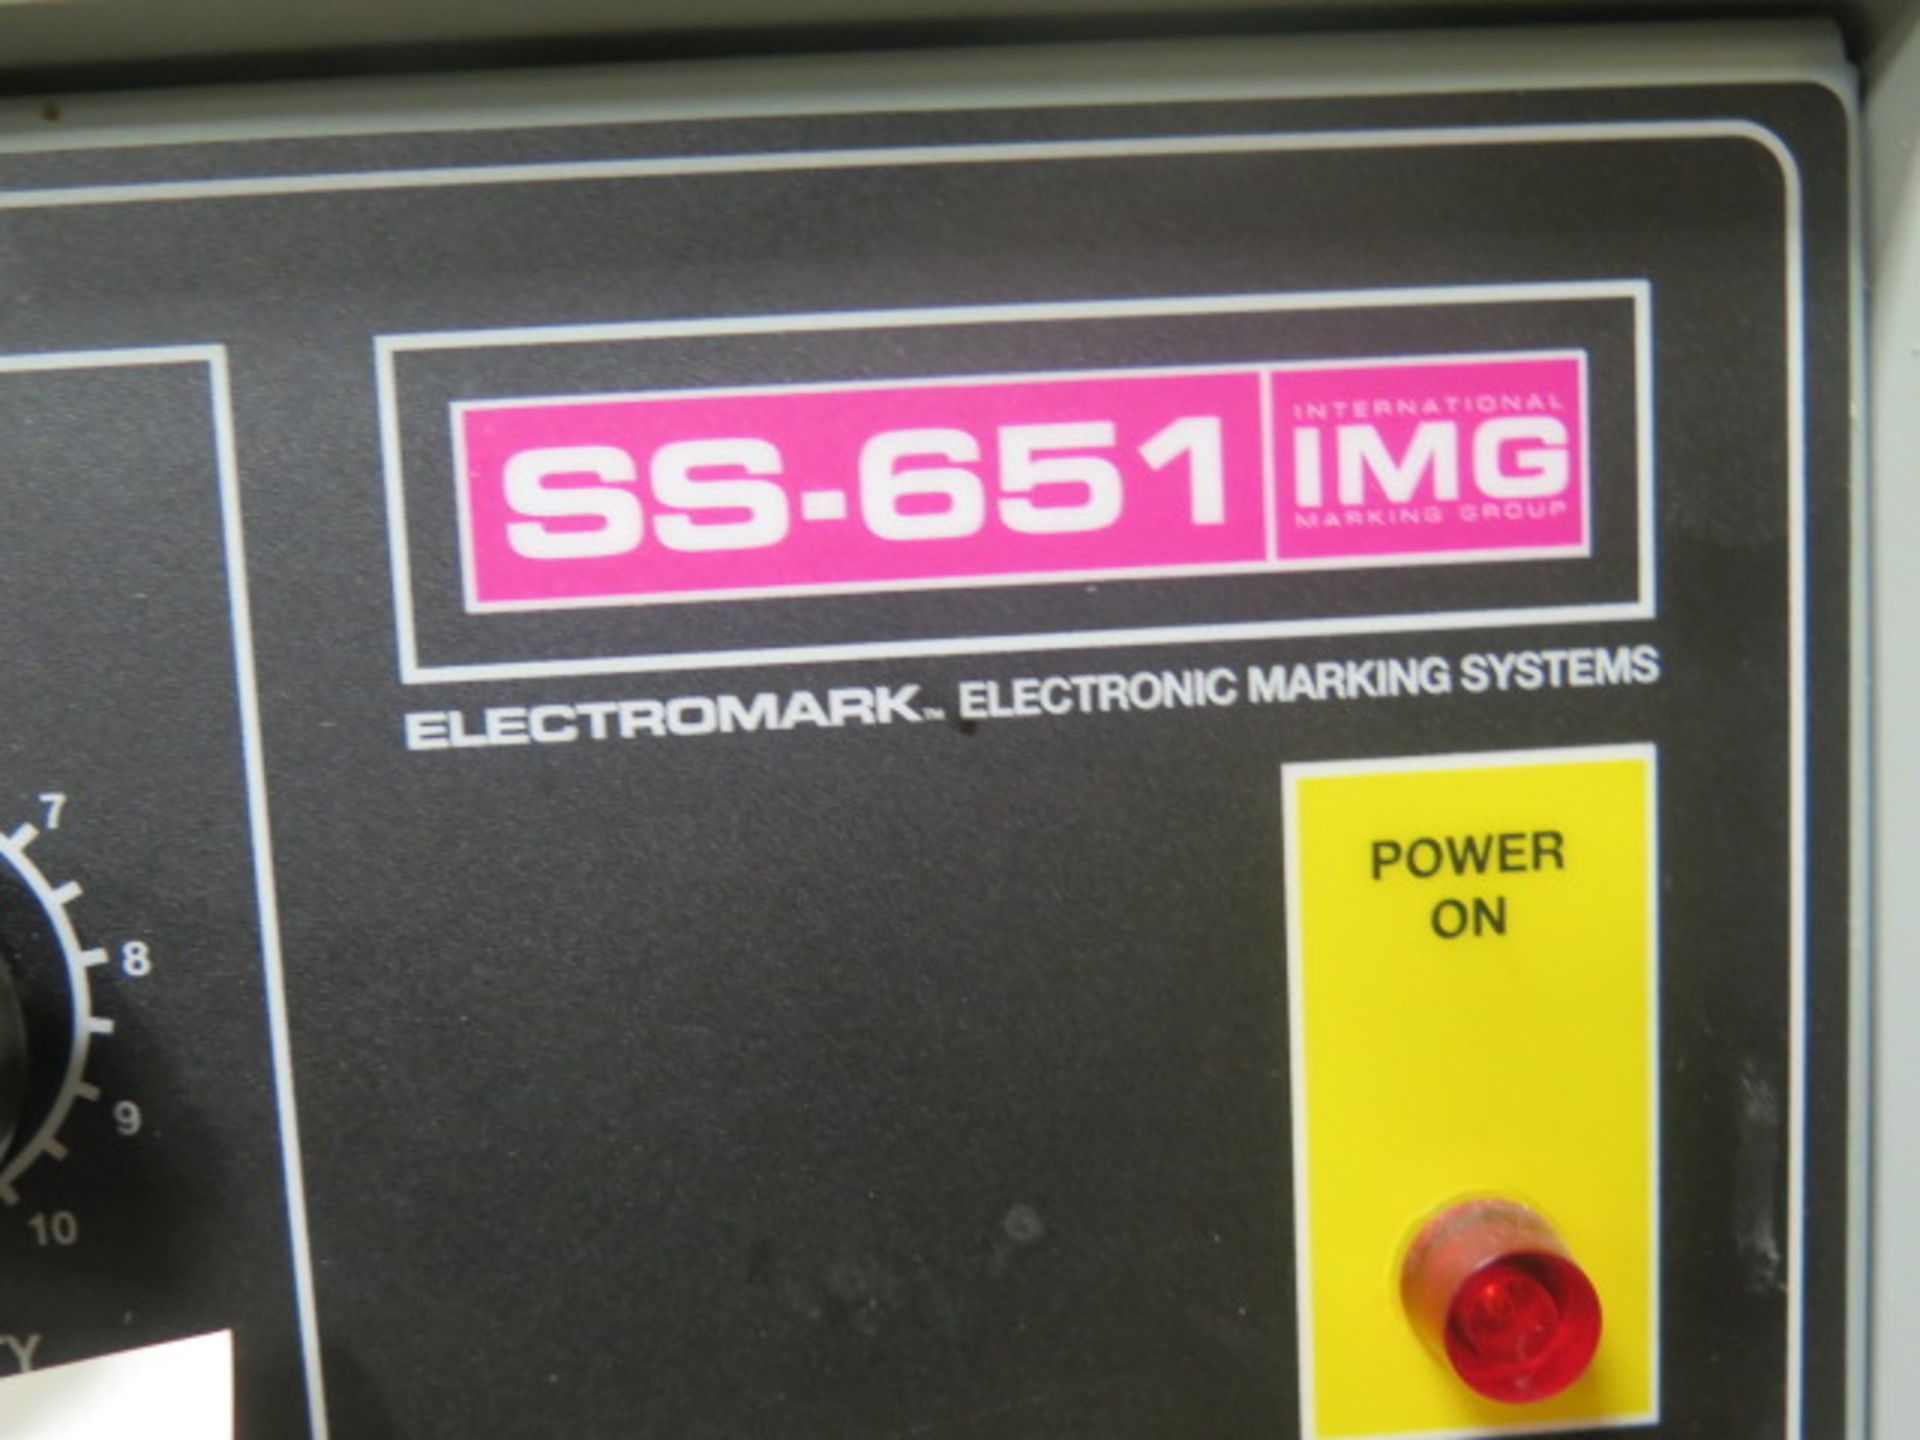 Electromark mdl. SS-651 IMG Electronic Marking System - Image 3 of 3